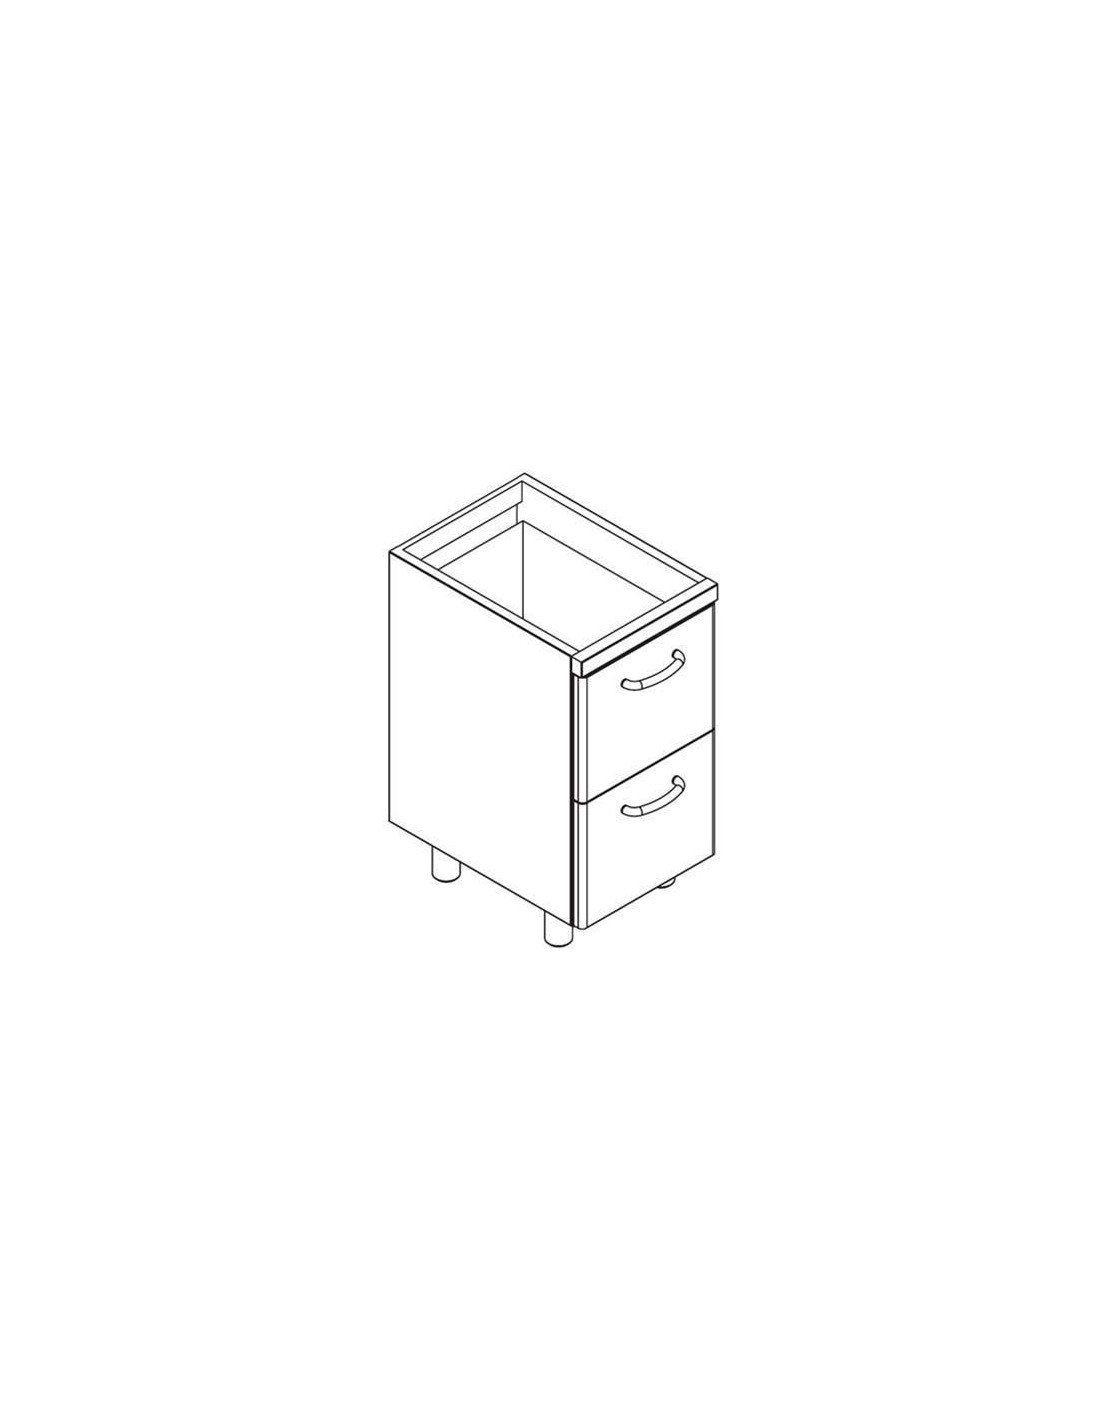 MOBILE BASE - N. 2 drawers 51.8 cm x 52 x 25h - Dimensions 60 x 56.6 x 79h